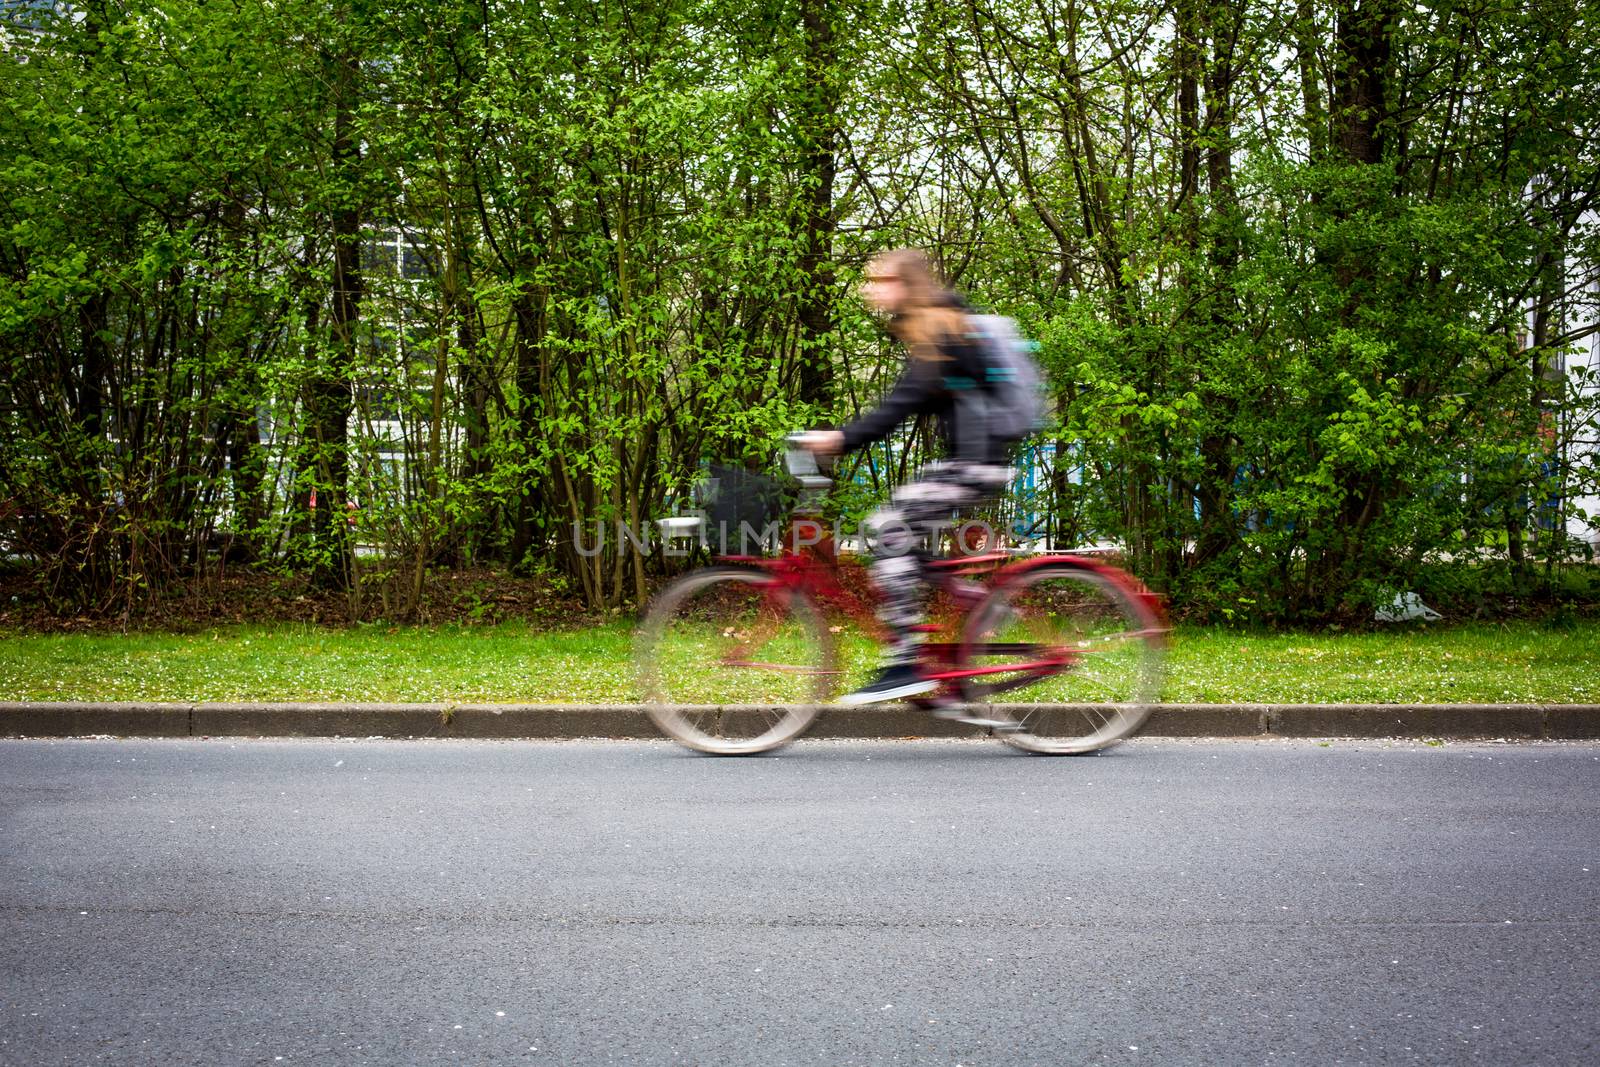 Motion blurred female biker on a city street, going fast